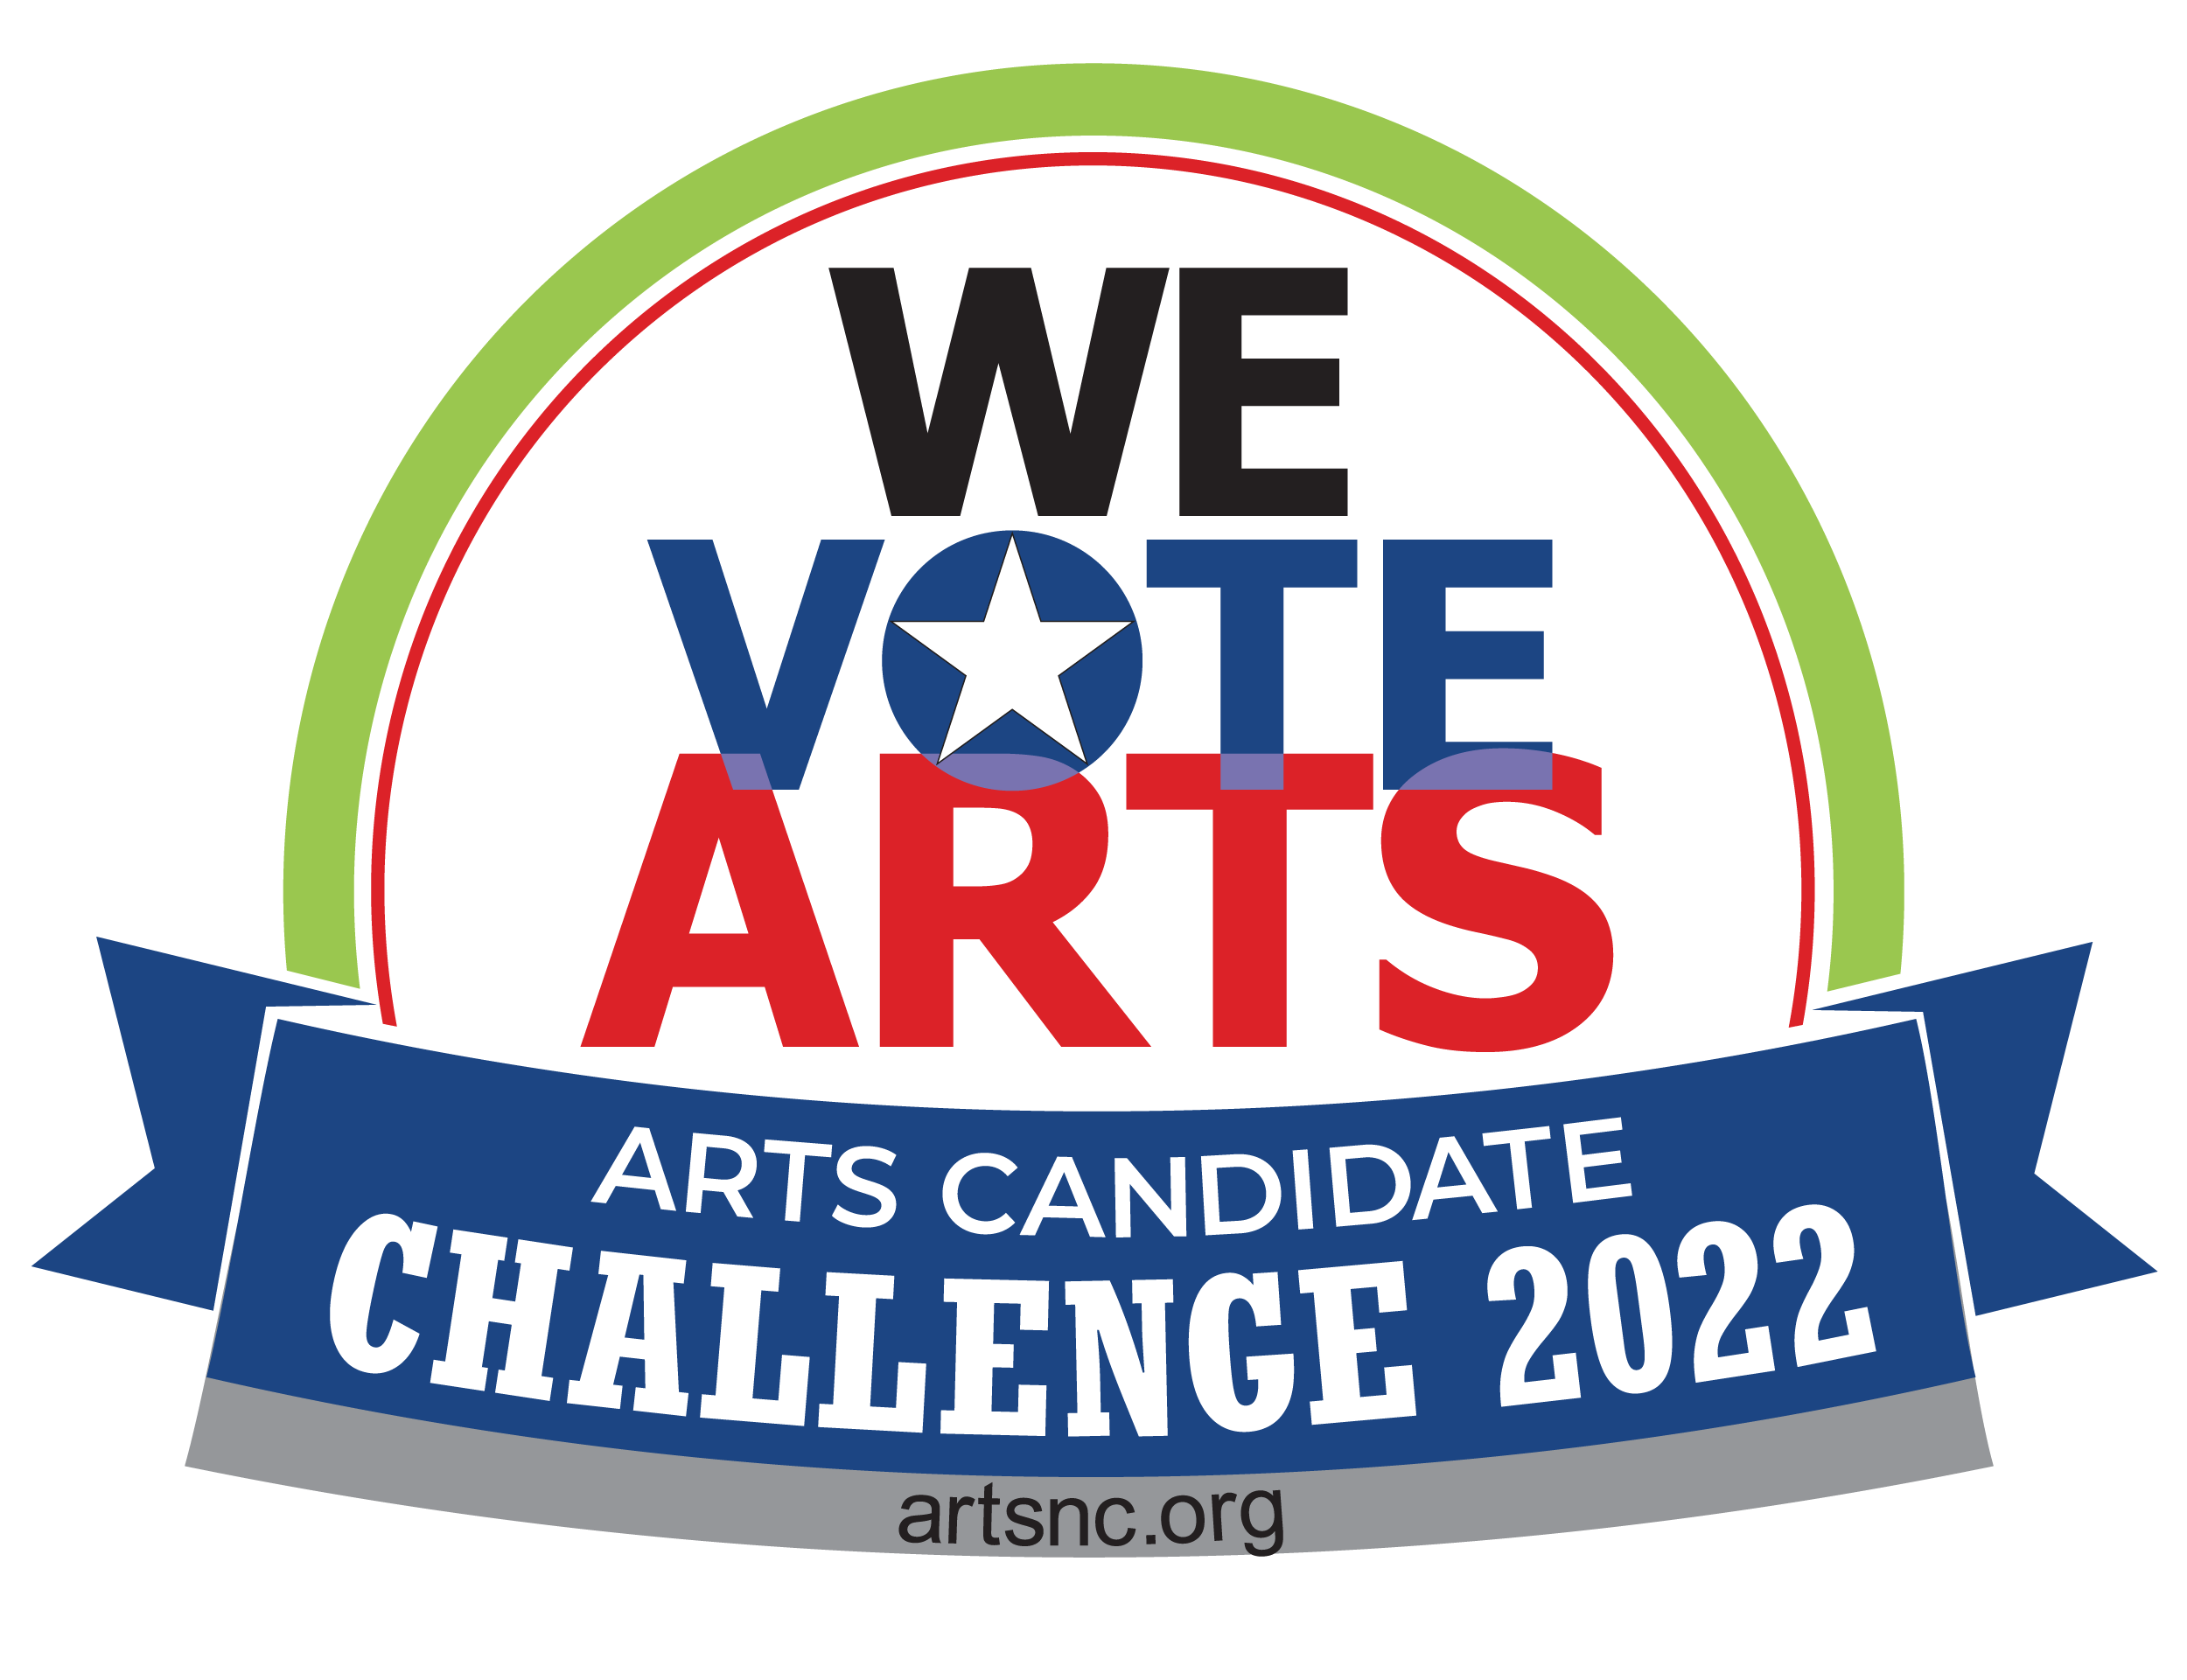 We Vote Arts- Arts Candidate Challenge 2022